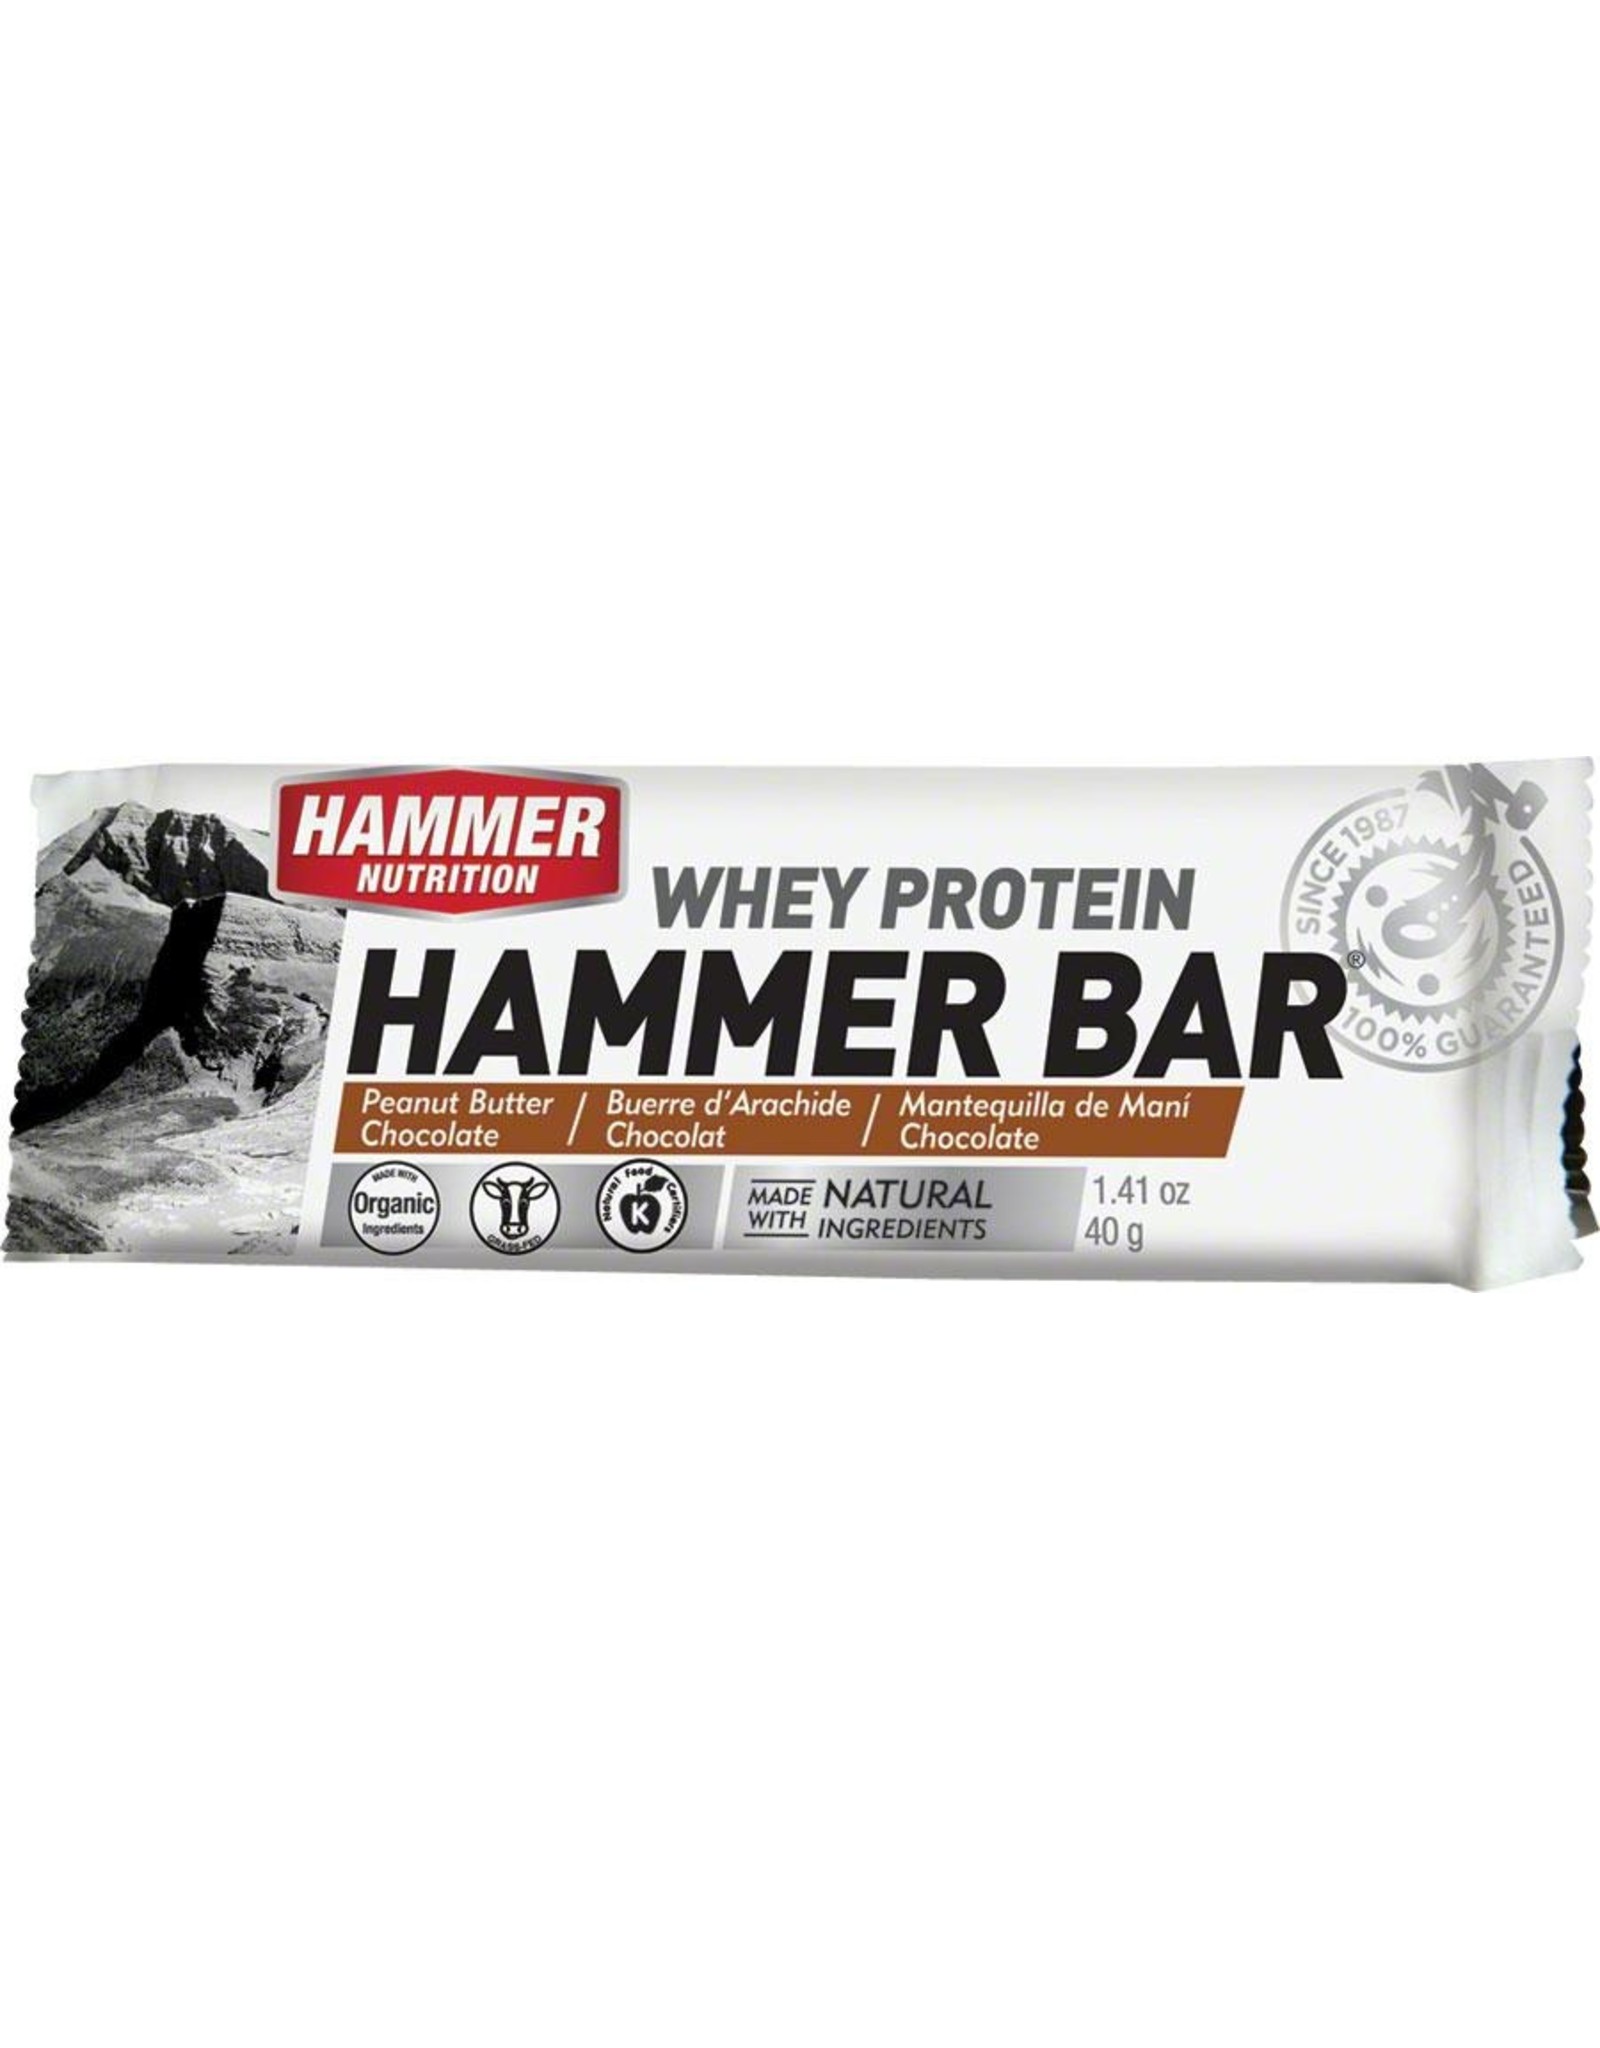 HAMMER BAR PEANUT BUTTER Chocolate 12 single